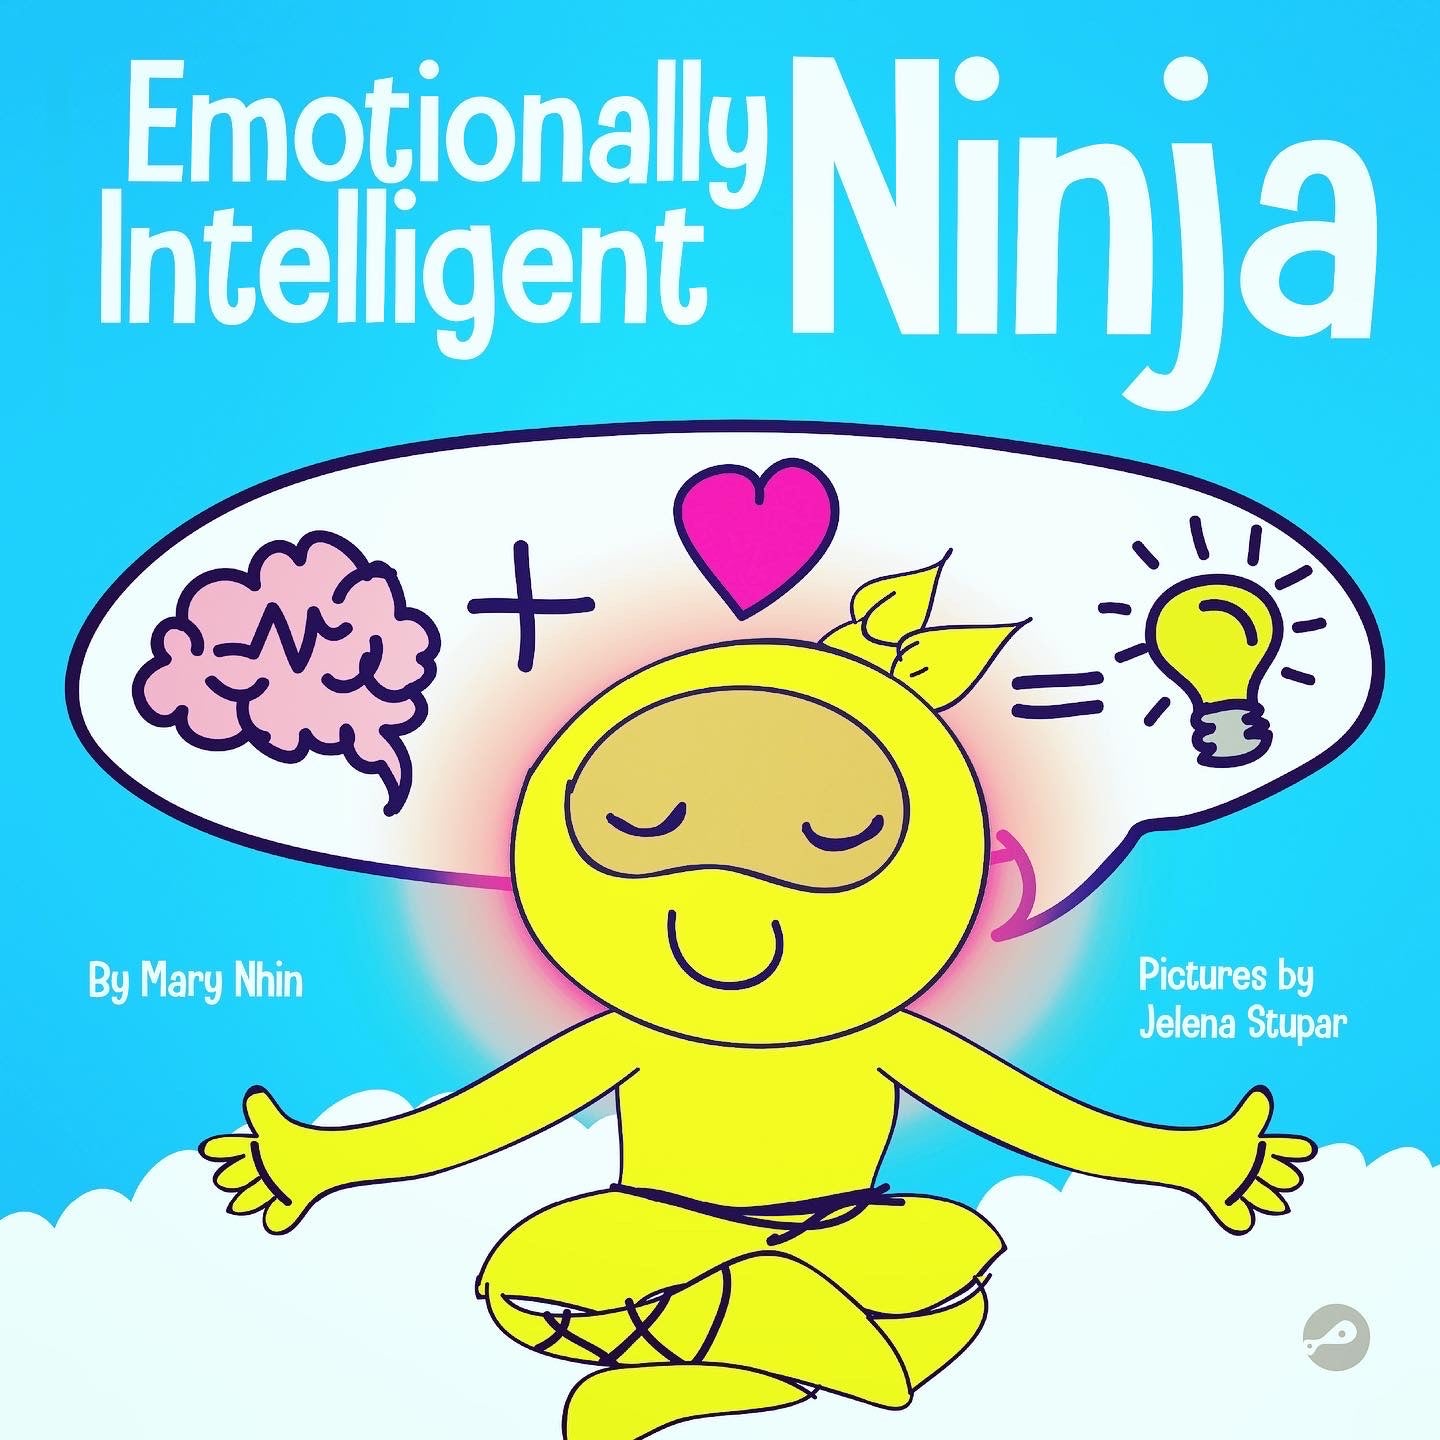 emotionally intelligent ninja